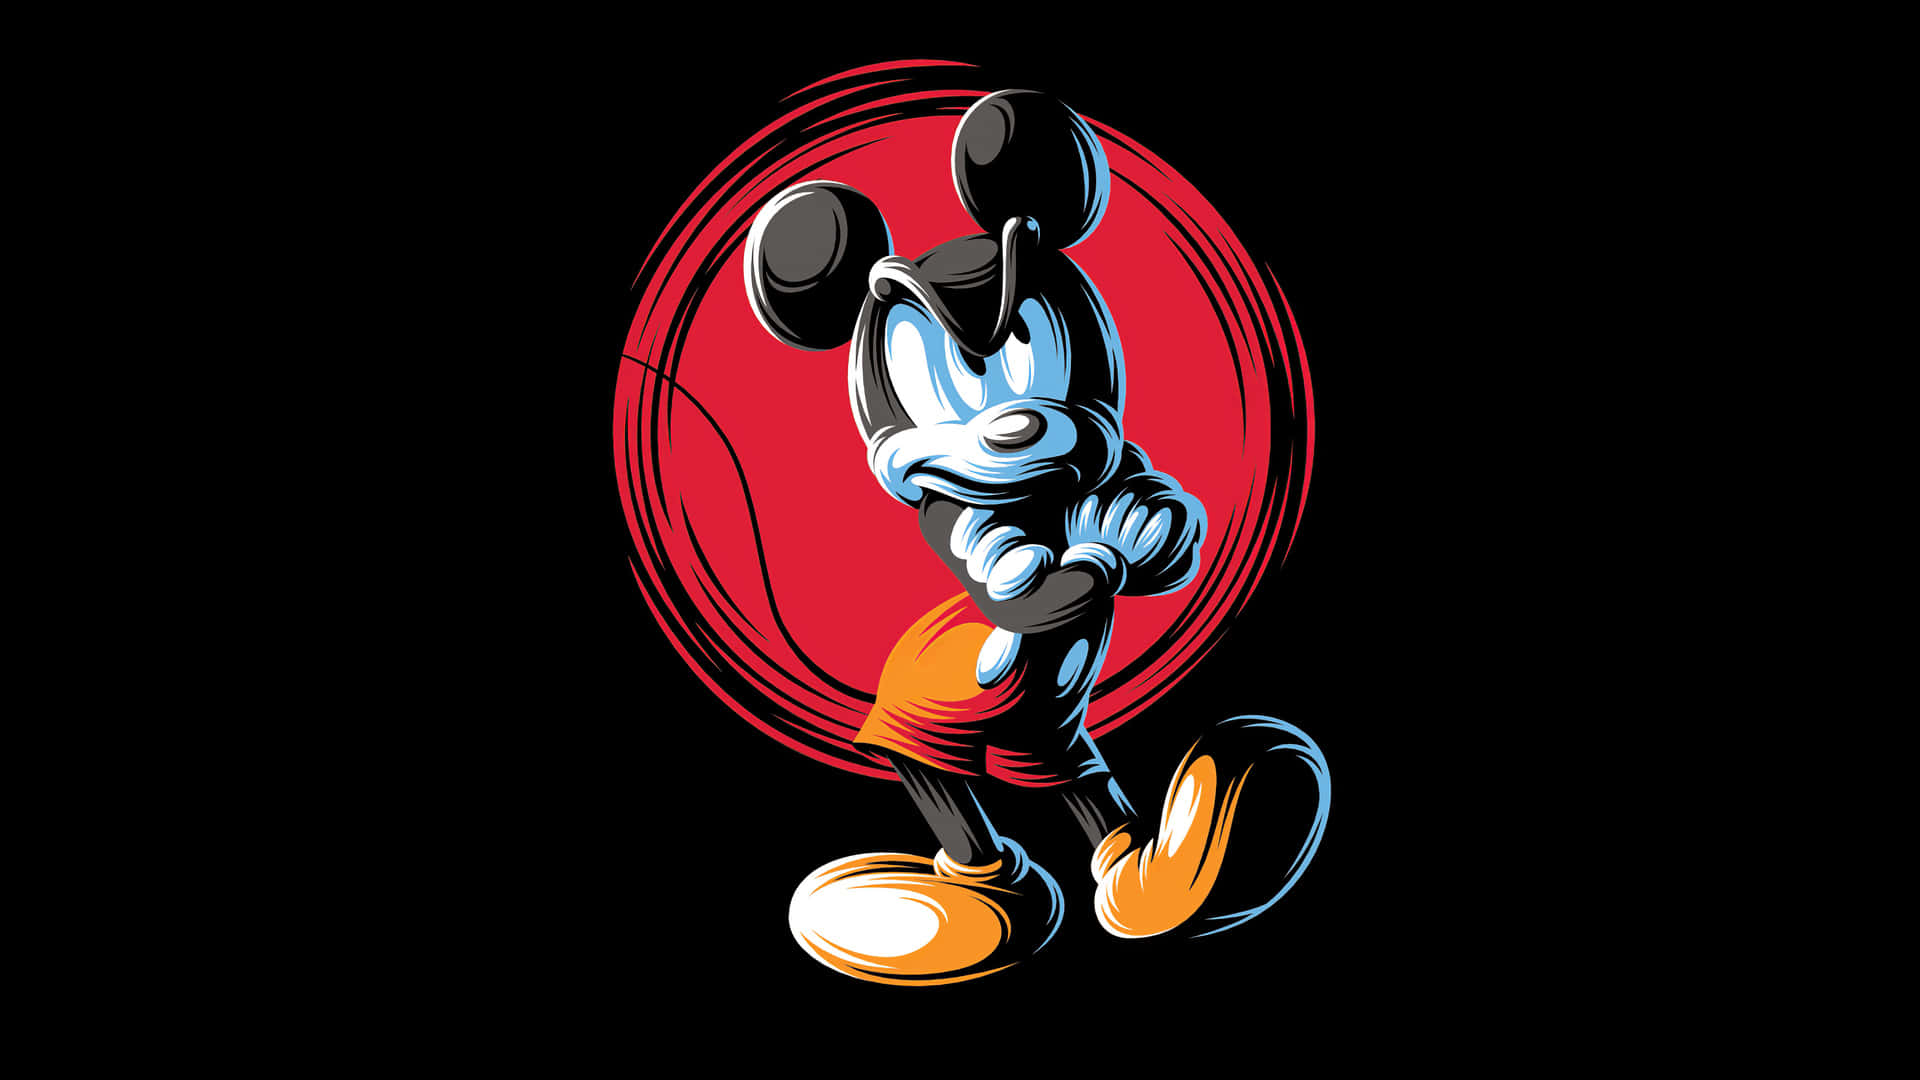 Fun Desktop Wallpaper Featuring Mickey Mouse Wallpaper